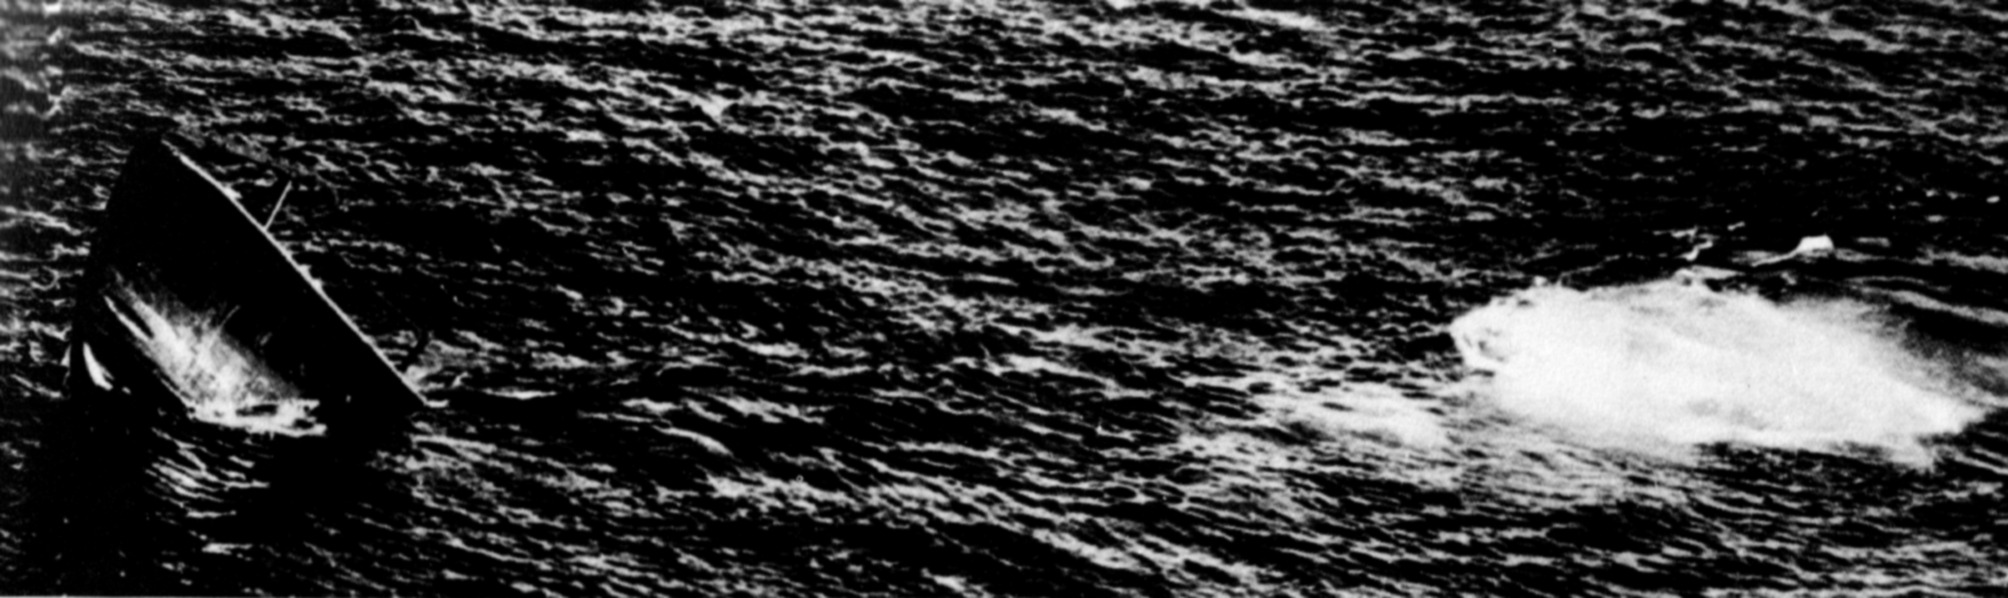 Gondar sinking off Egyptian coast 30.1.40.JPG